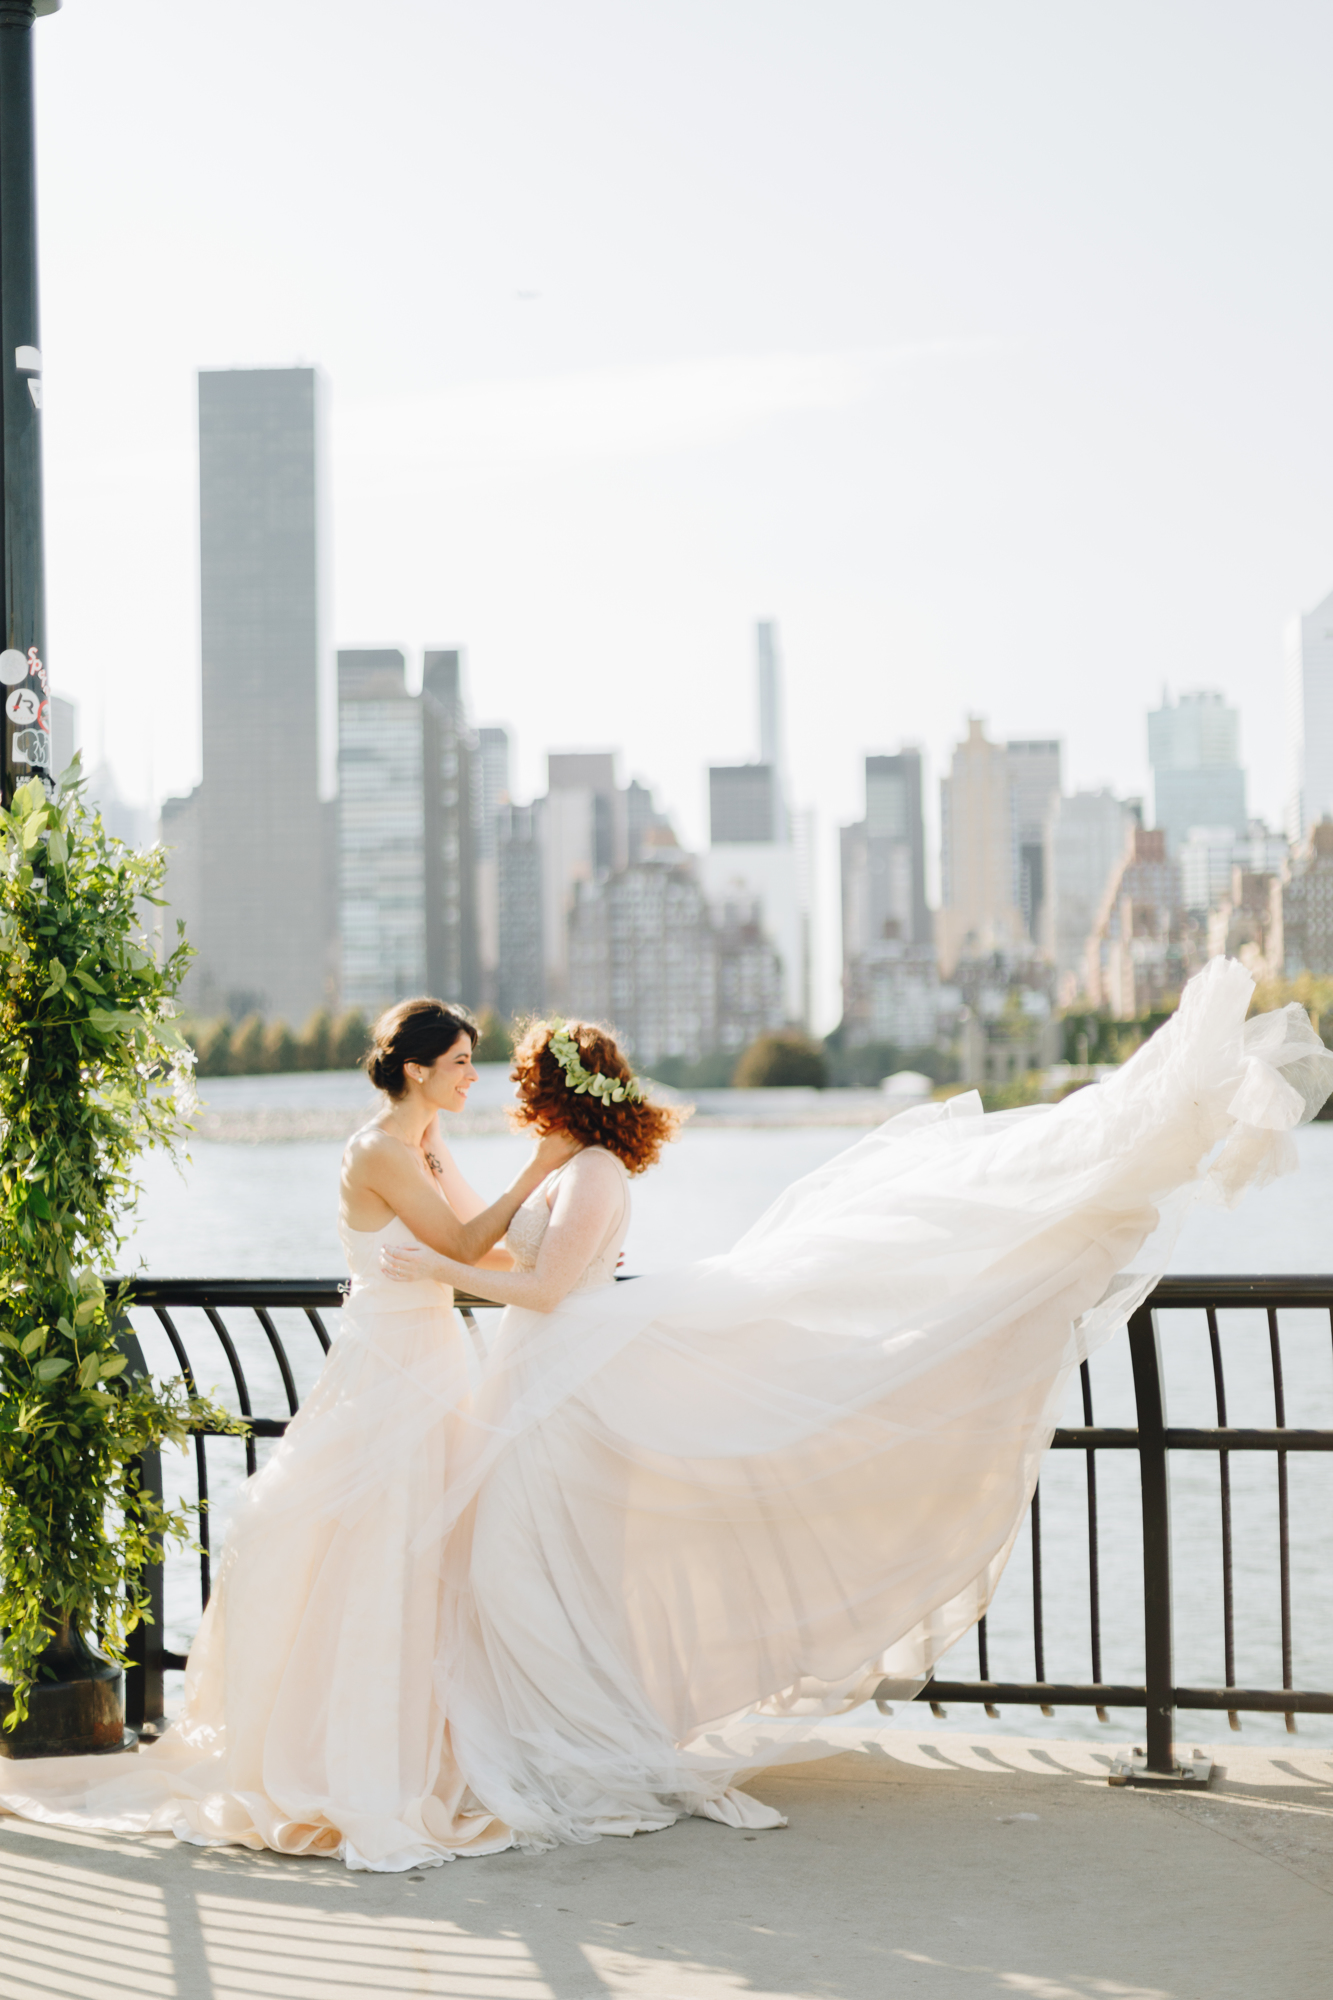 Sensational New York wedding photographers